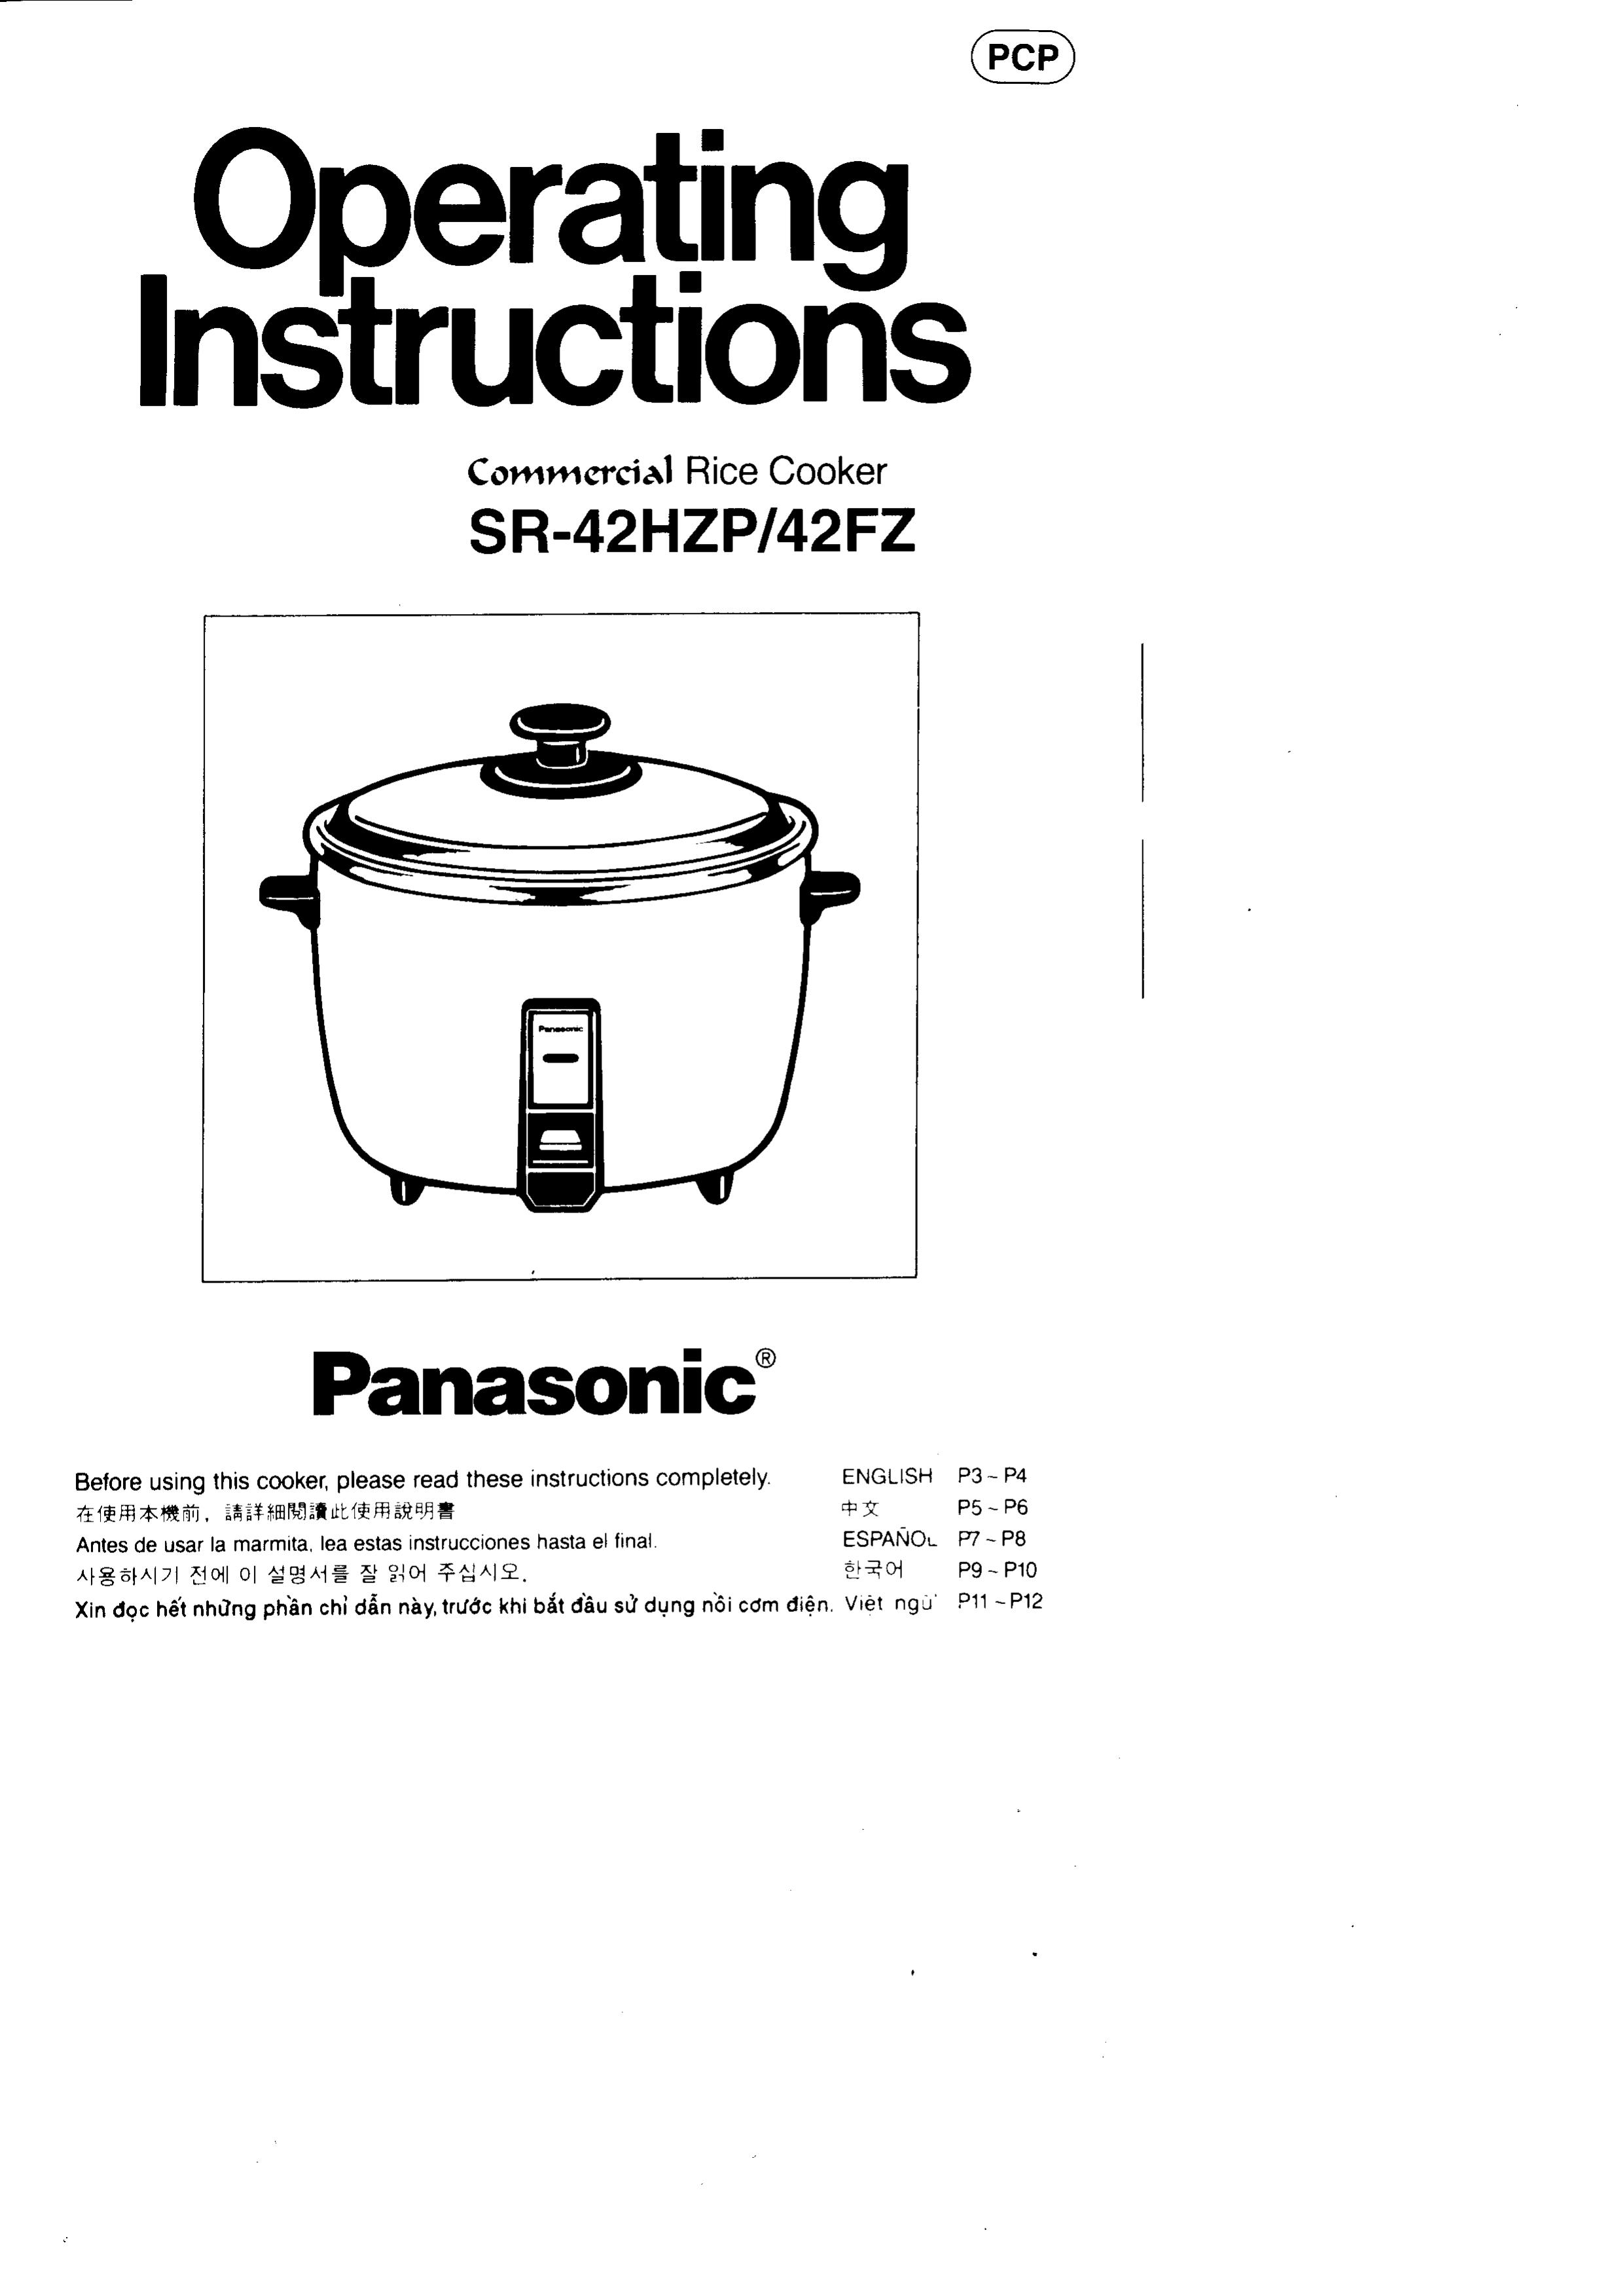 Panasonic SR-42HZP/42FZ Rice Cooker User Manual